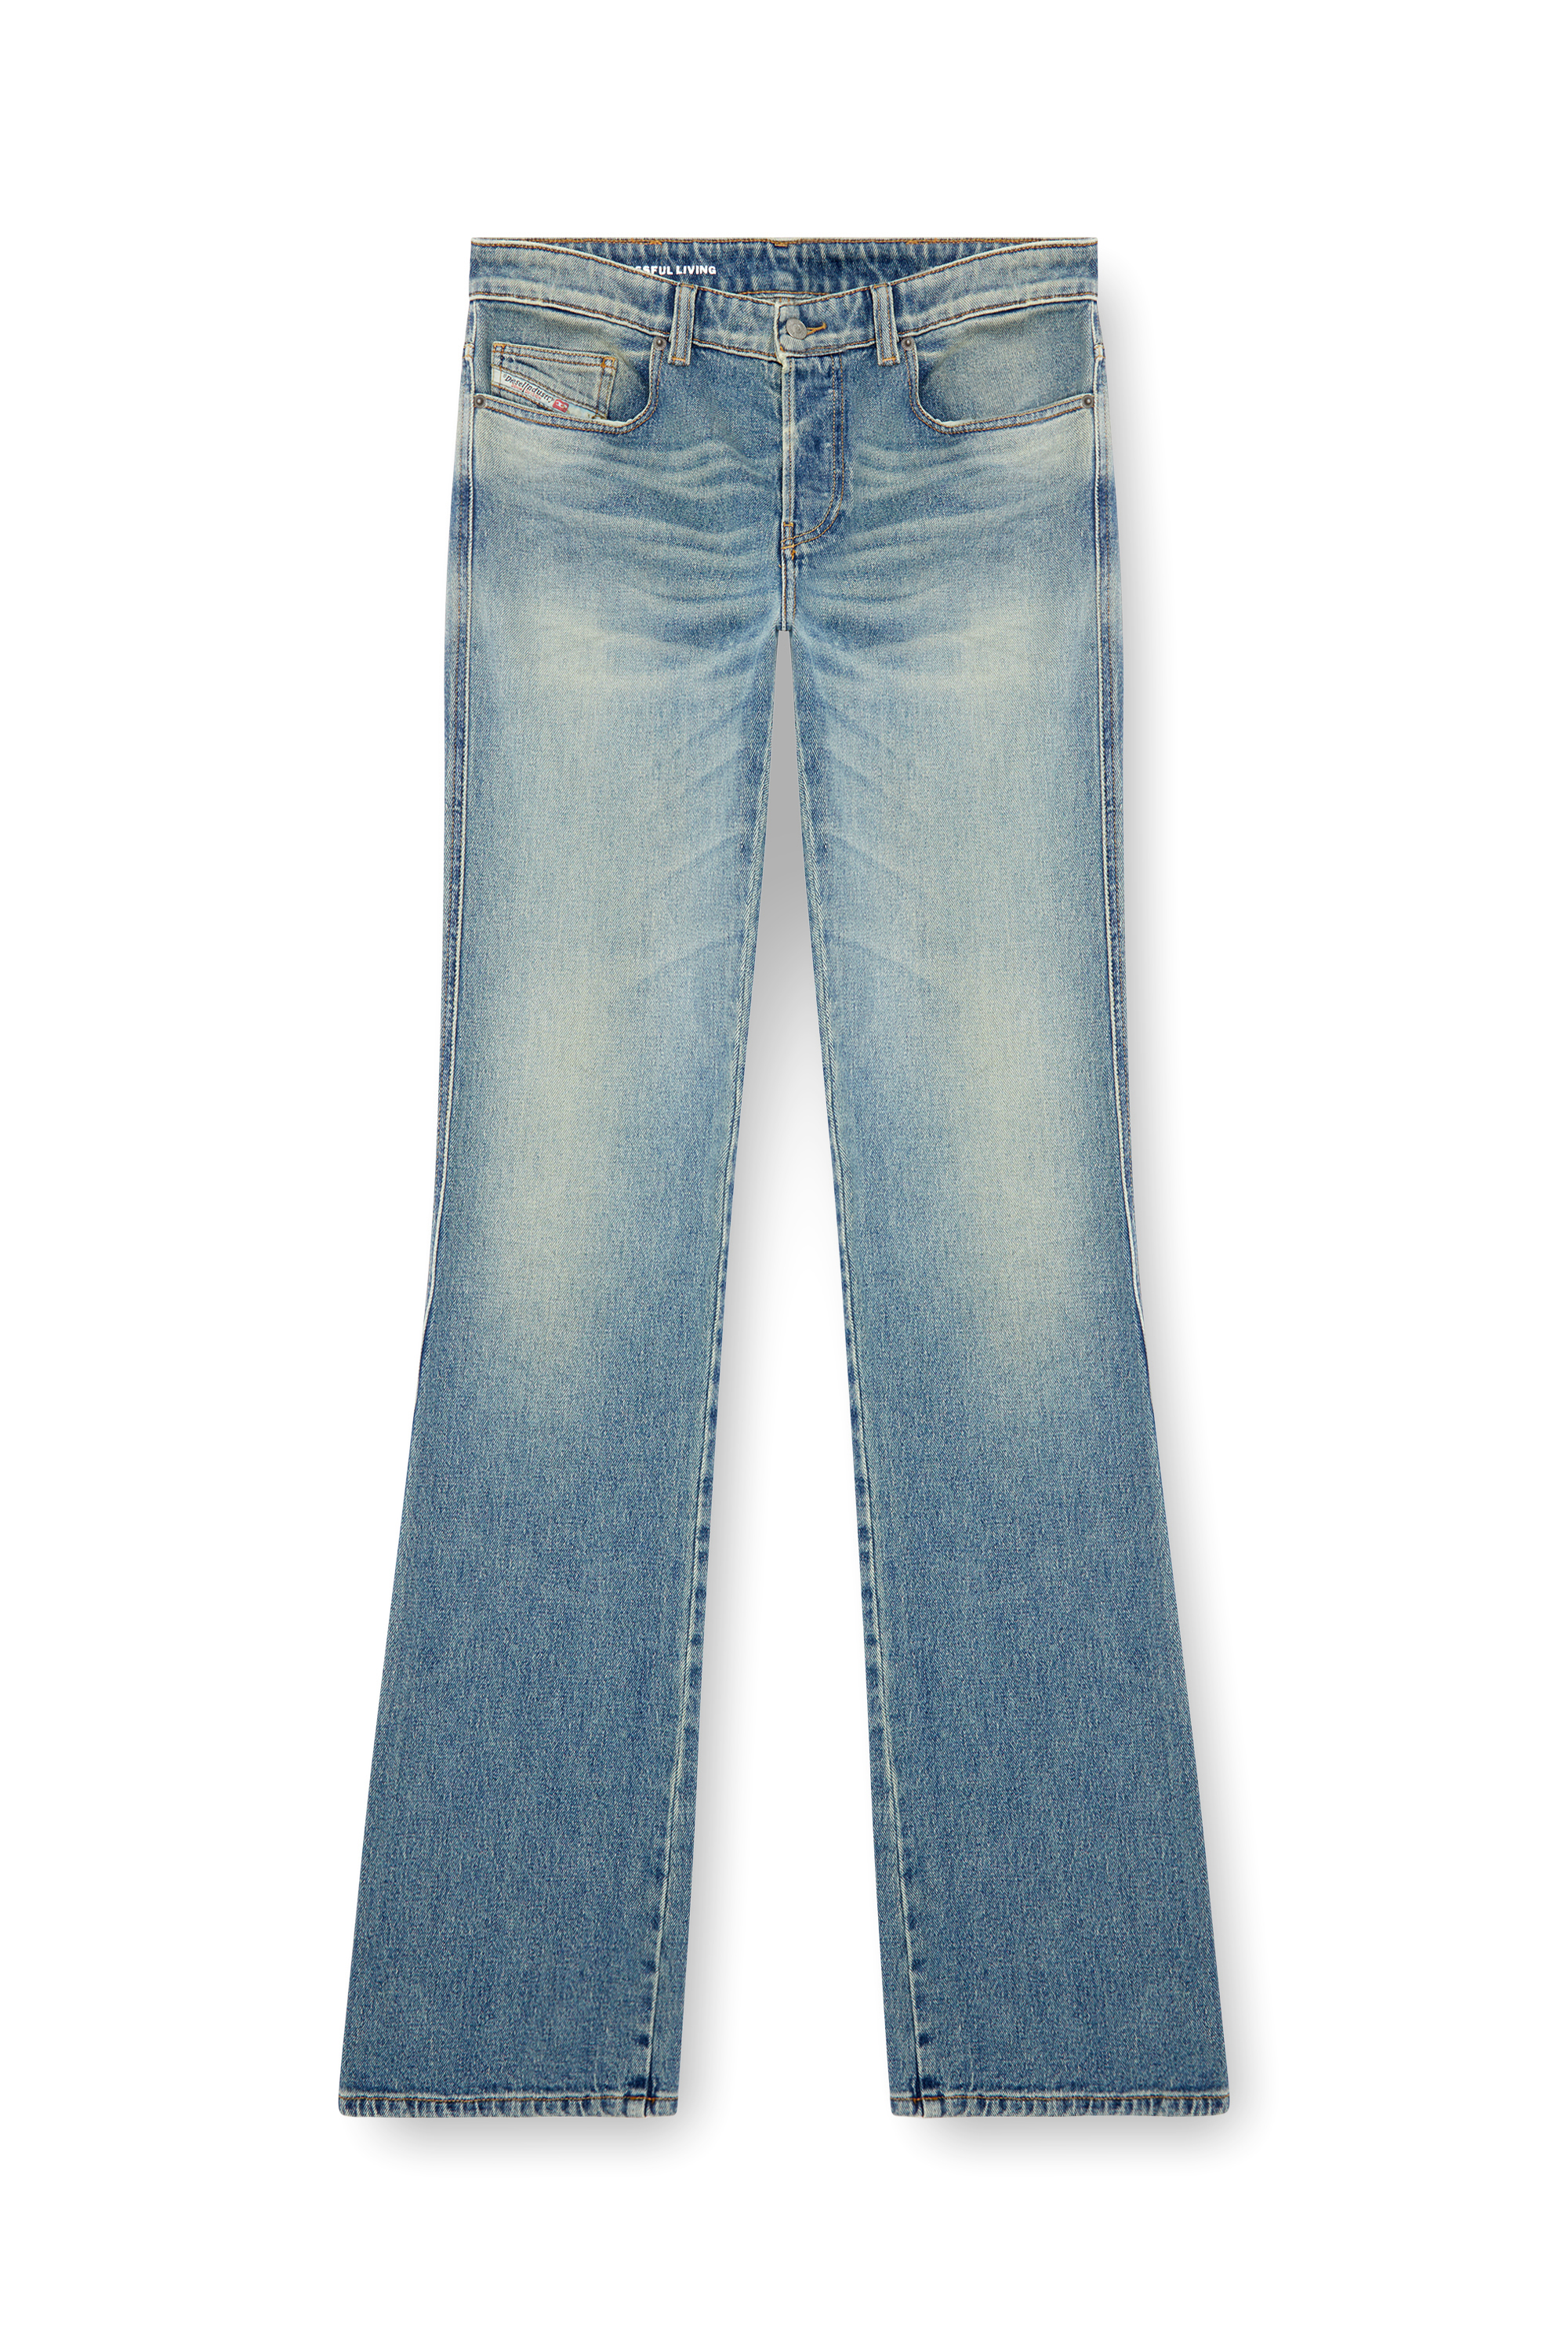 Diesel - Bootcut Jeans 1998 D-Buck 09J55, Hombre Bootcut Jeans - 1998 D-Buck in Azul marino - Image 3